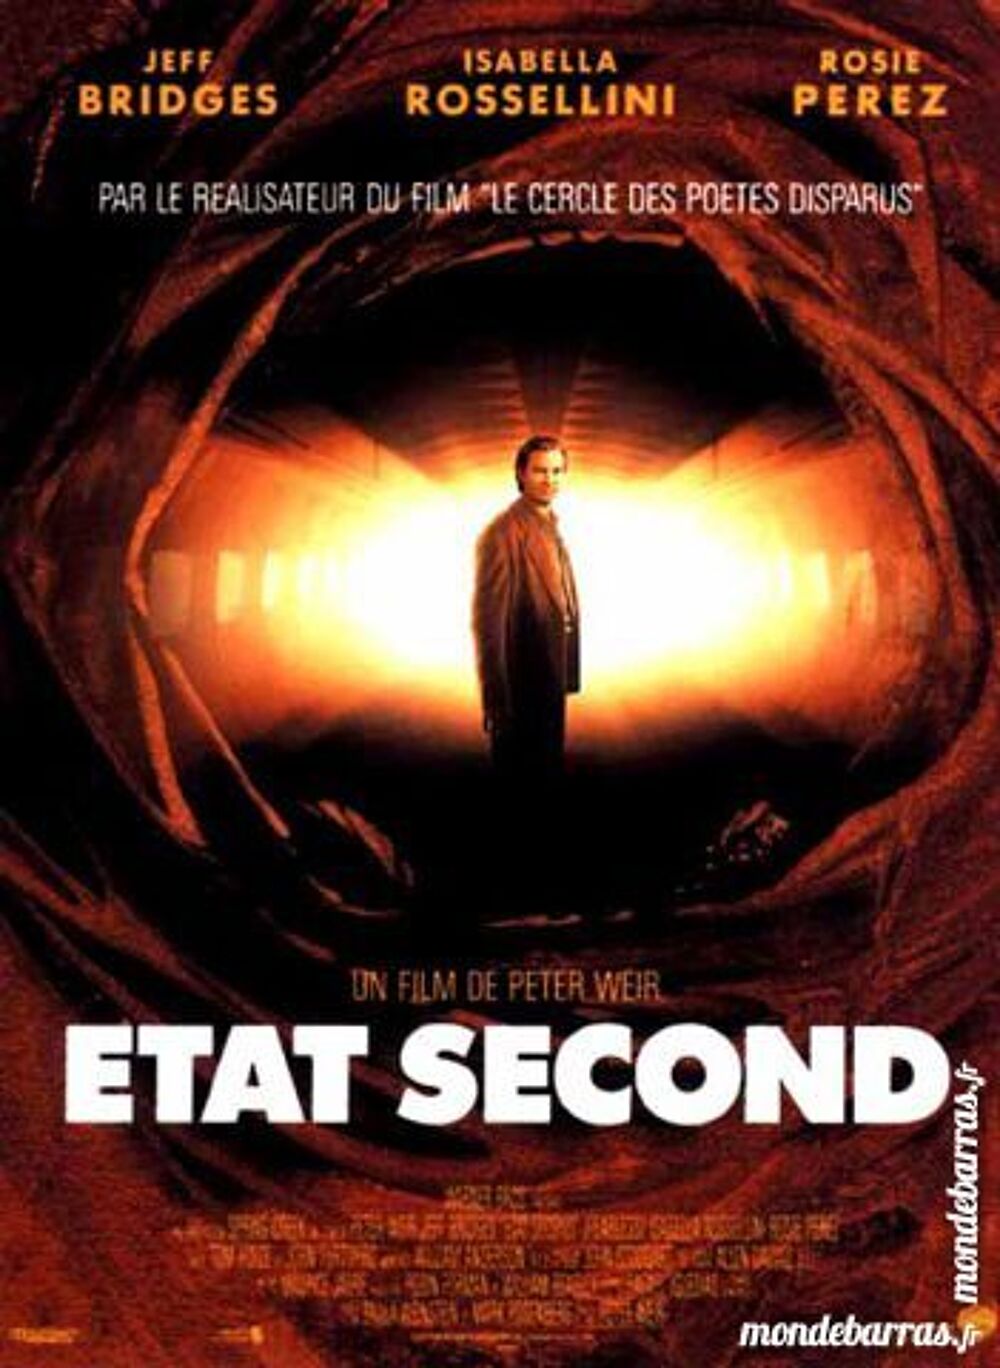 K7 Vhs: Etat second (185) DVD et blu-ray